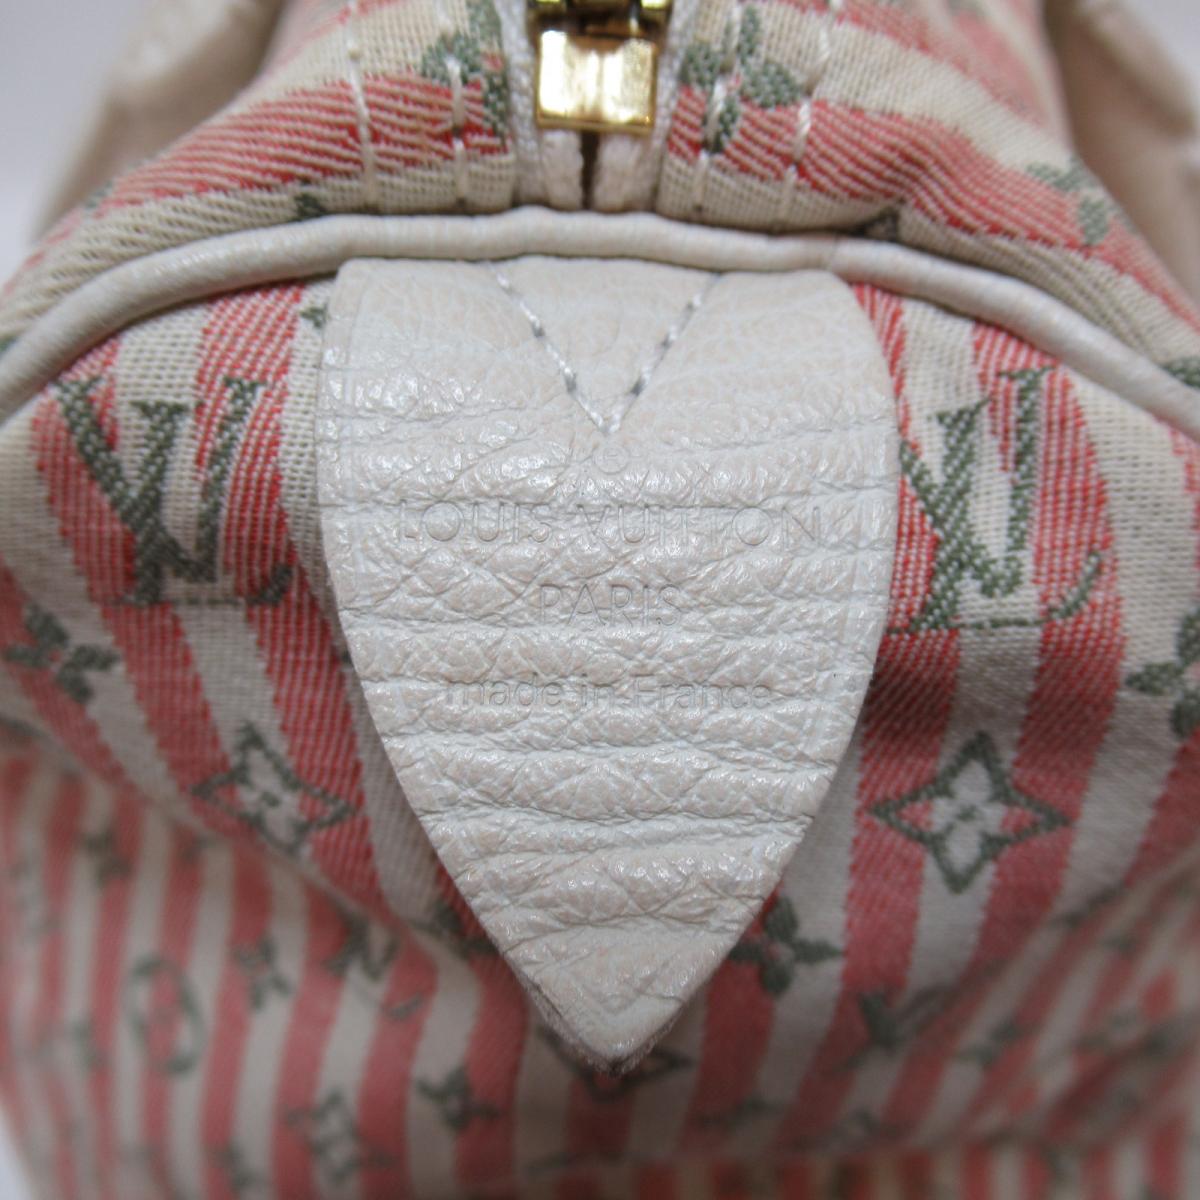 Louis Vuitton M95501 Monogram Mini-Lin Hand Bag Croisette Speedy